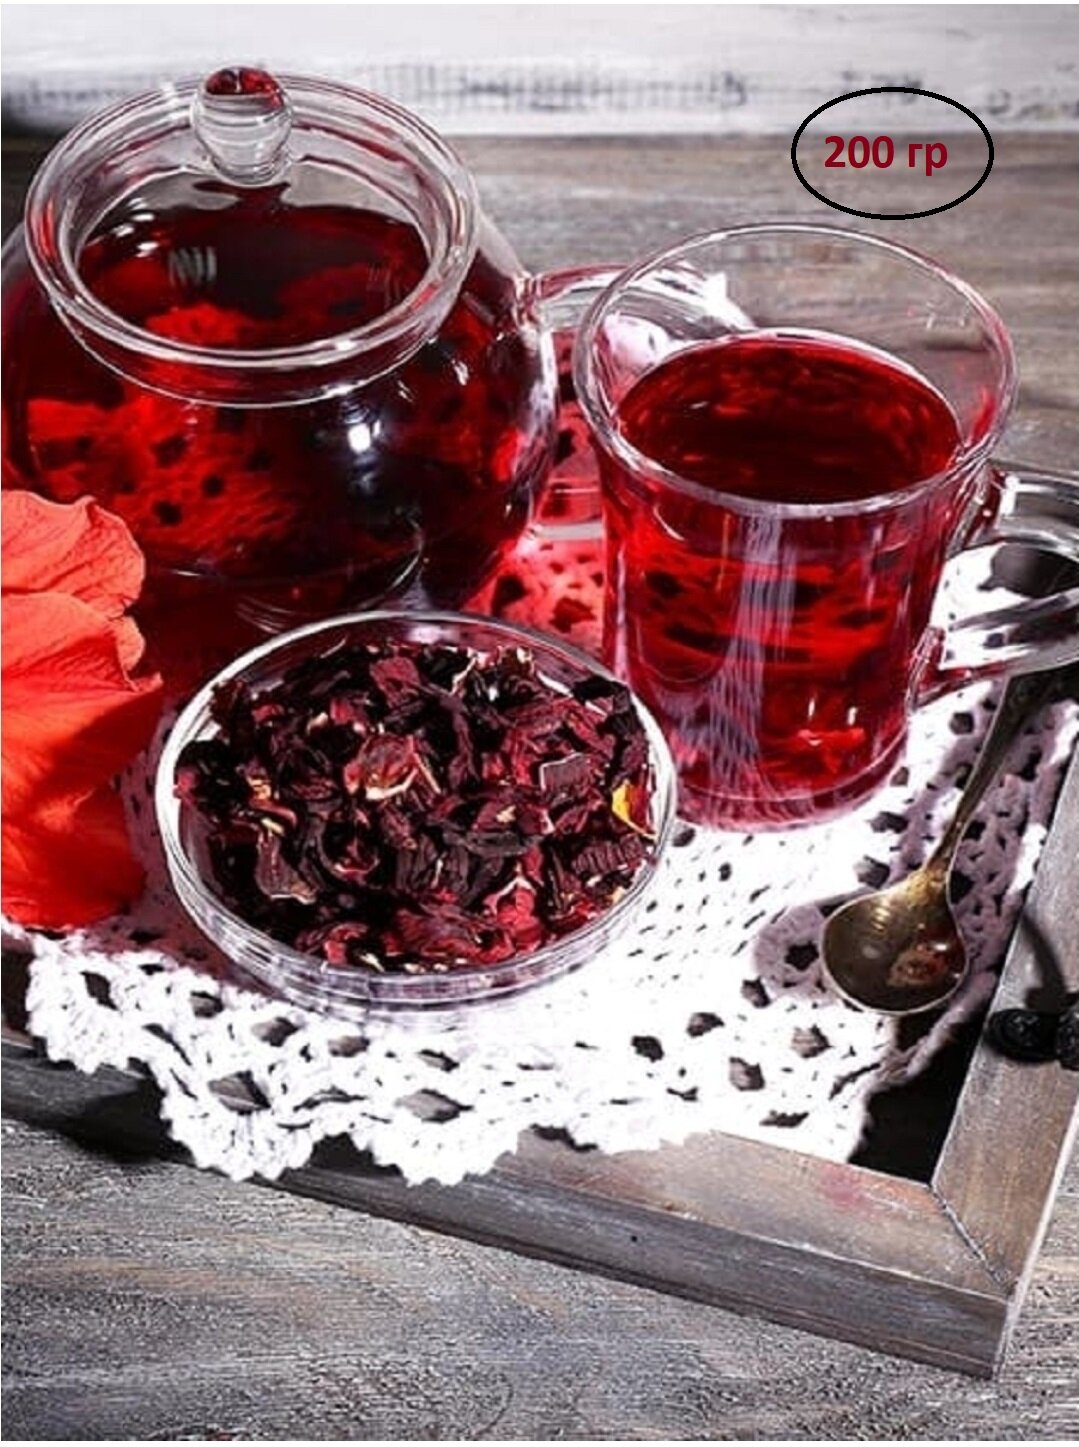 Чай / Королевский каркаде / 200 гр / каркаде / каркаде чай / чай каркаде / каркаде чай листовой / чай каркаде натуральный